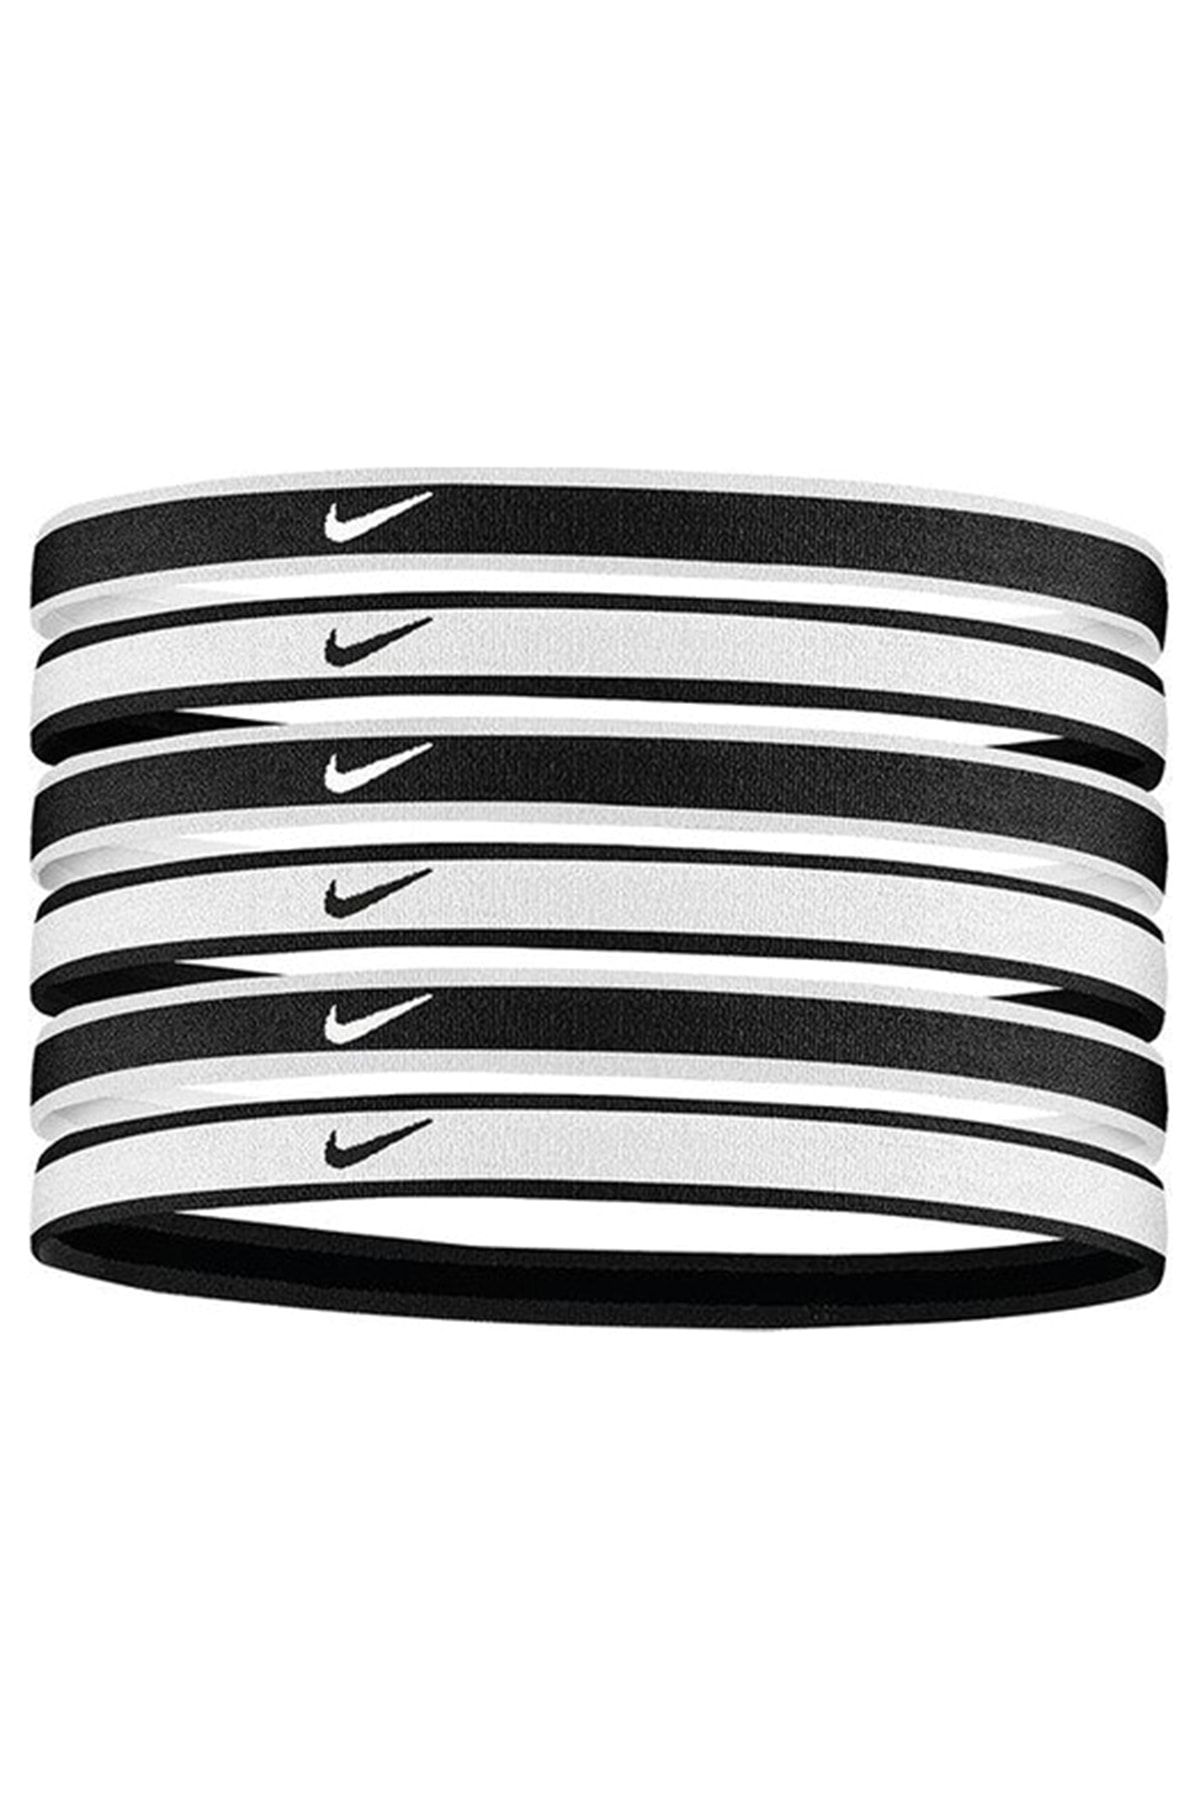 Nike Tipped Swoosh Unisex Beyaz Antrenman Saç Bandı N.100.2021.176.os